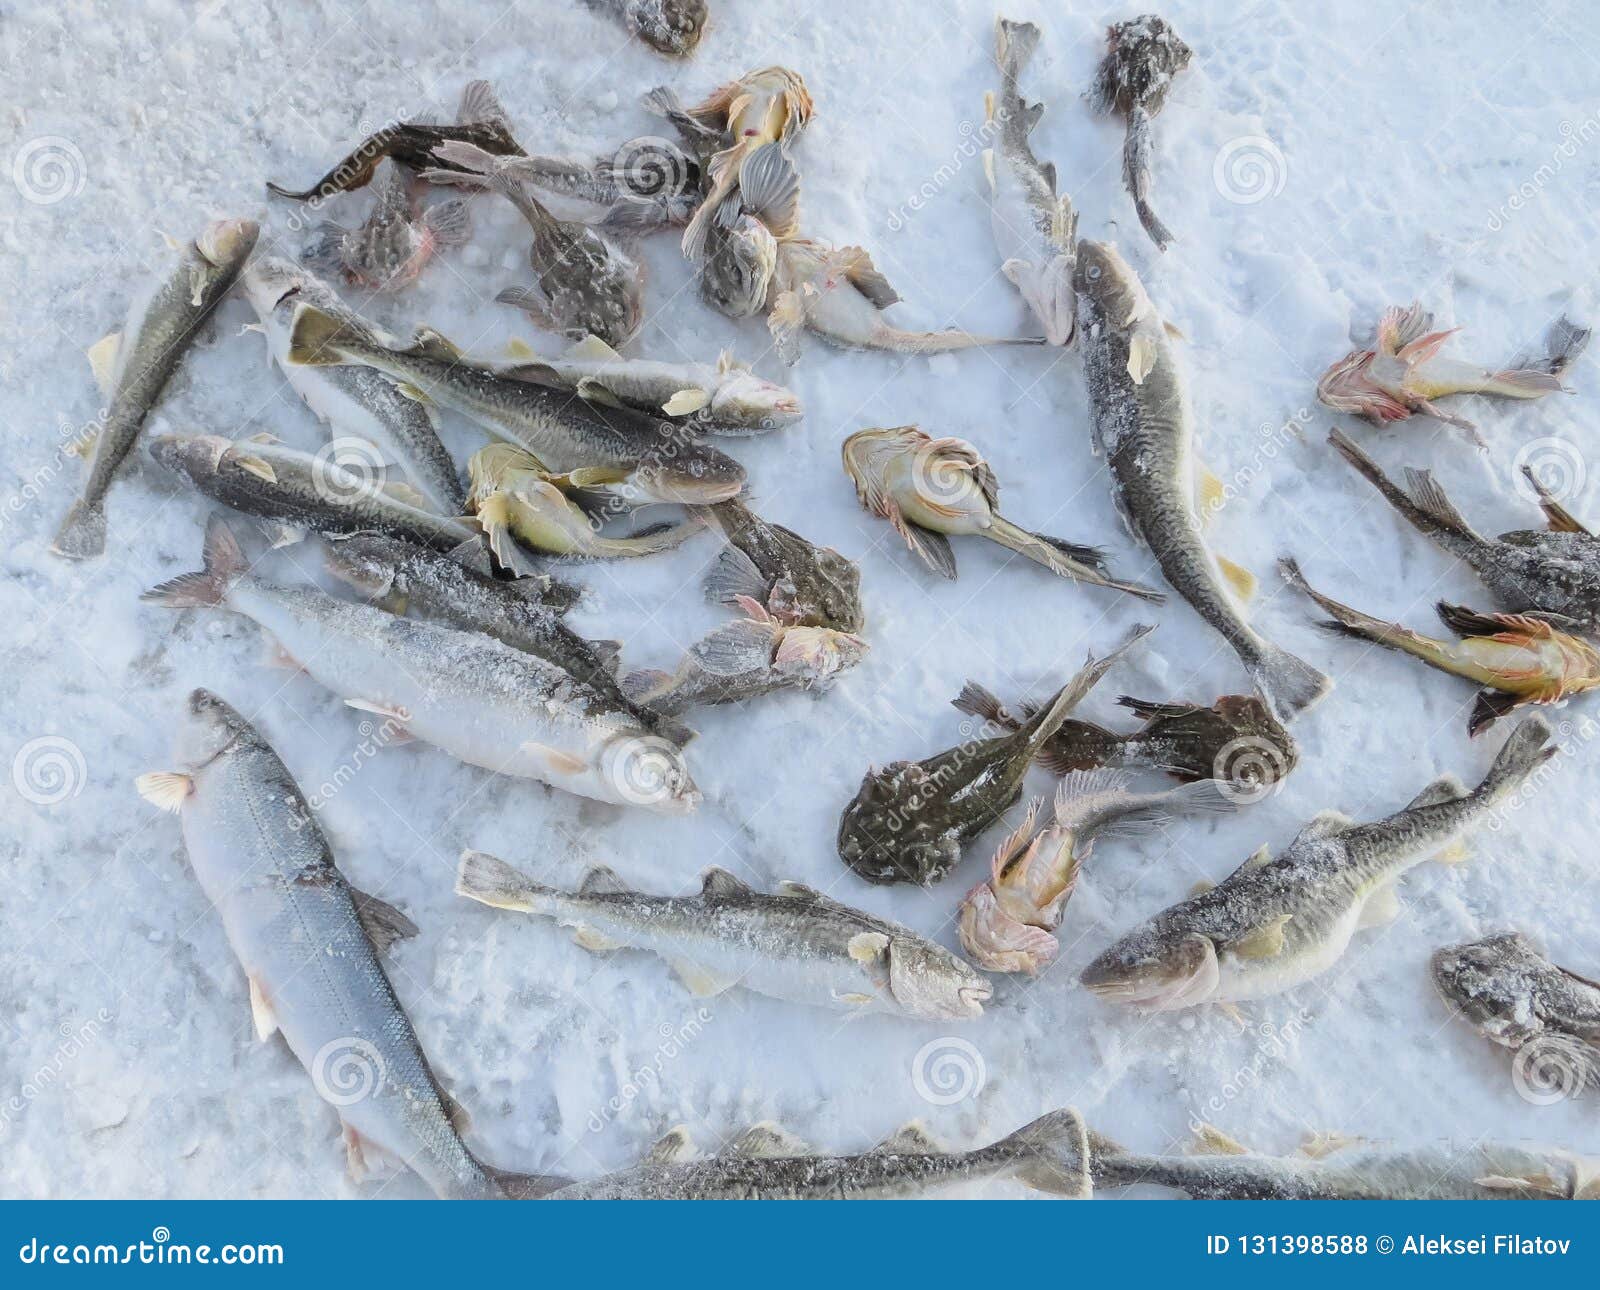 Fish on ice winter fishing stock photo. Image of animal - 131398588